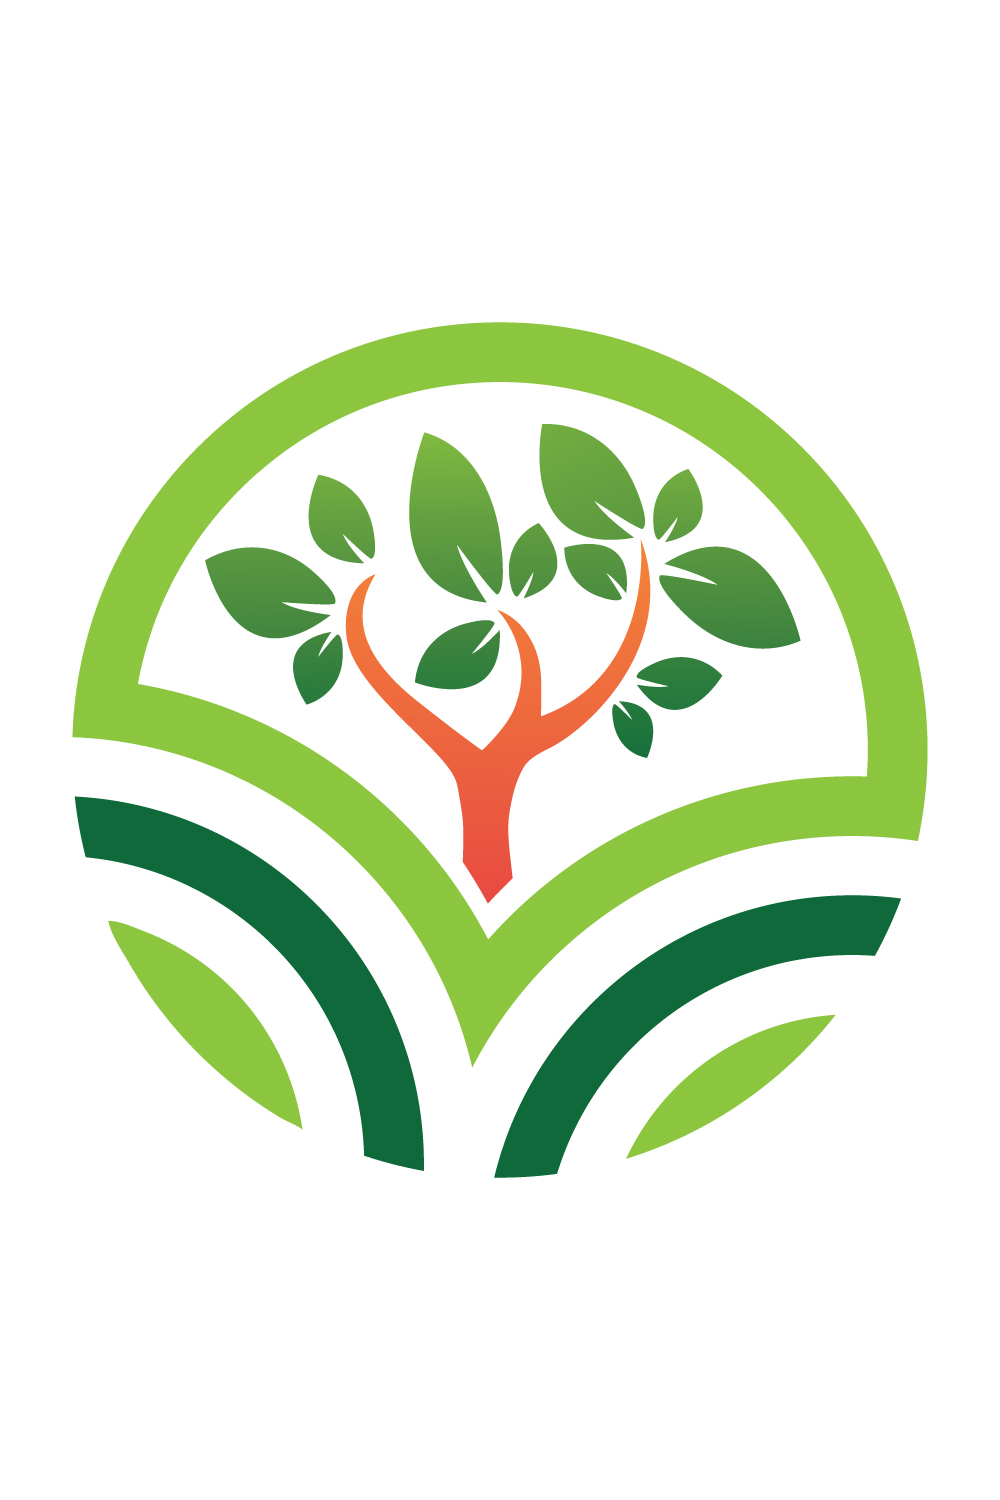 Fresh Tree Farm logo design pinterest preview image.